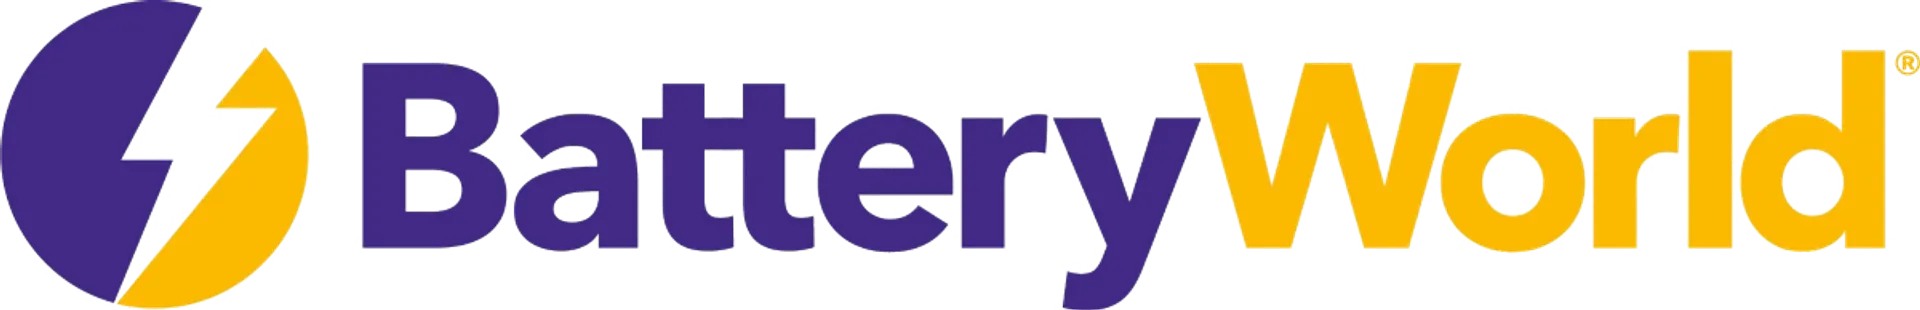 BATTERY WORLD logo